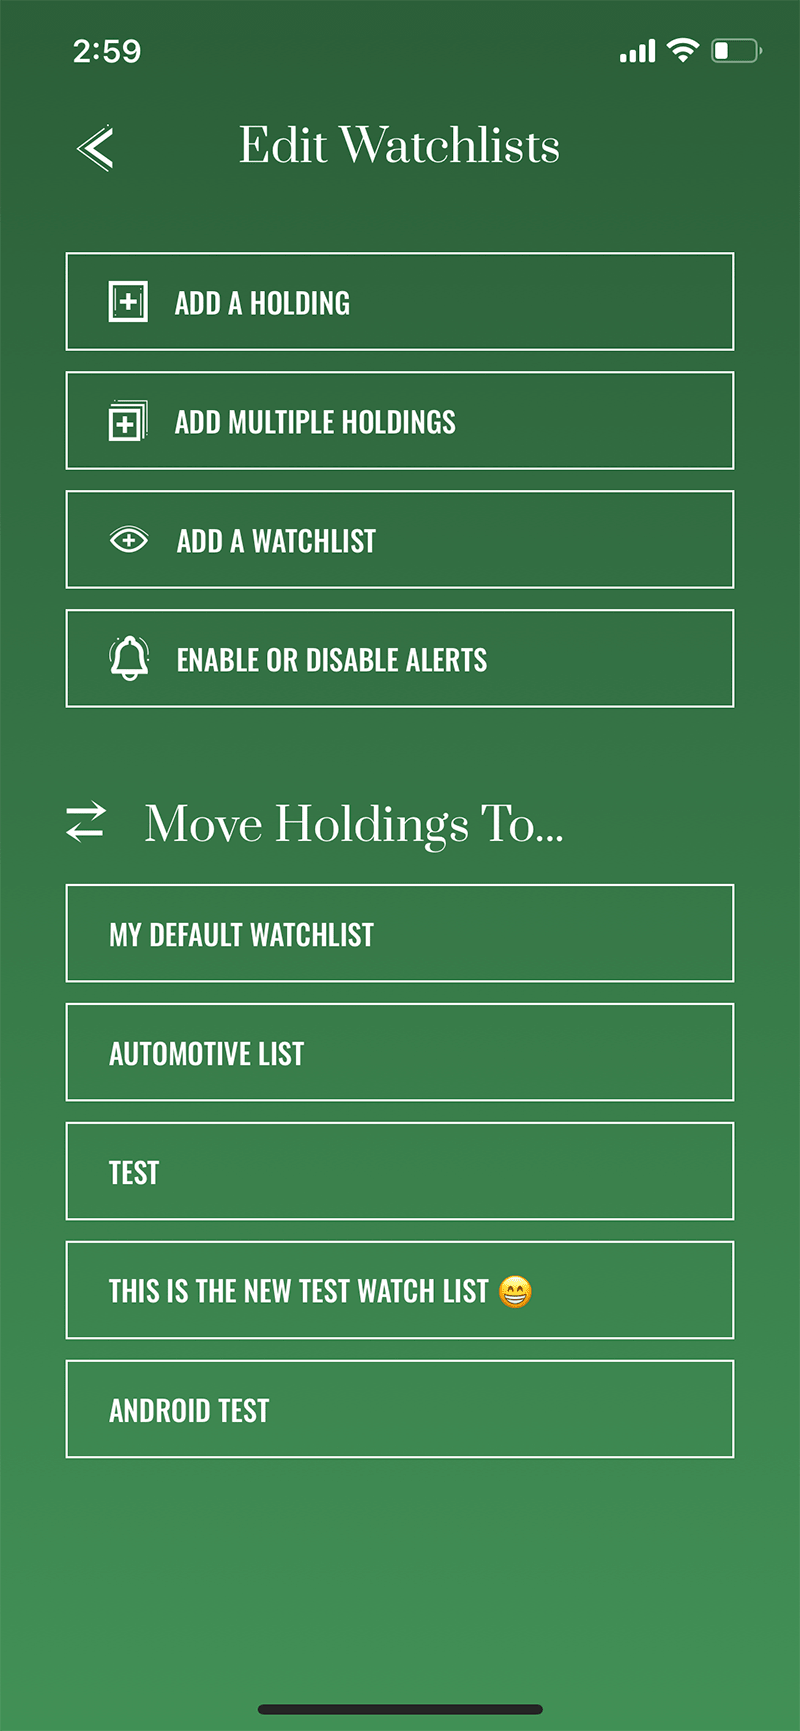 MarketBeat App Screenshot - Edit Watchlists